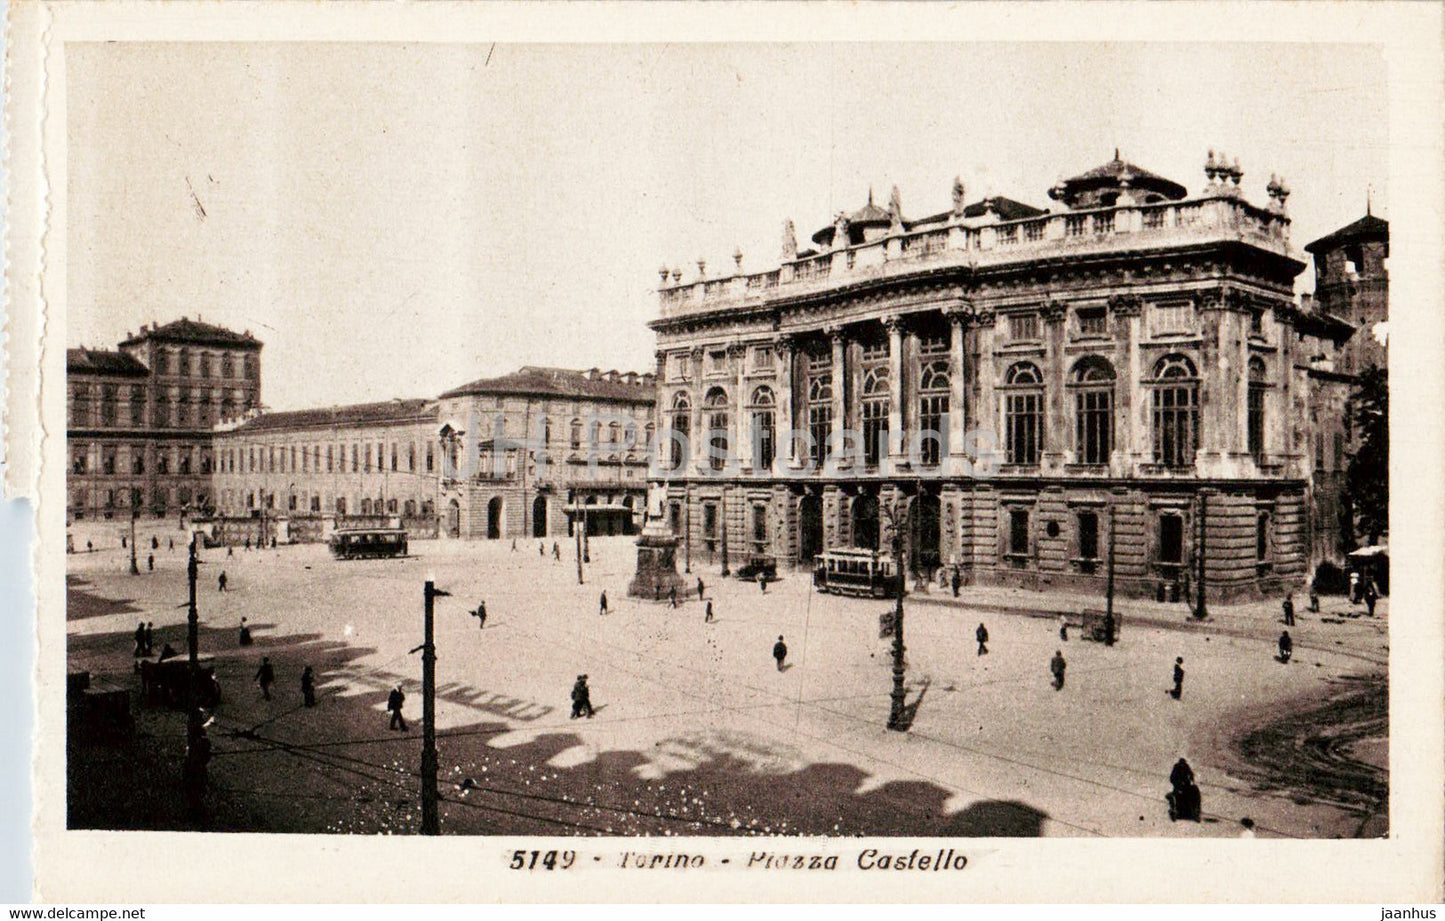 Torino - Turin - Piazza Castello - 5149 - old postcard - Italy - unused - JH Postcards